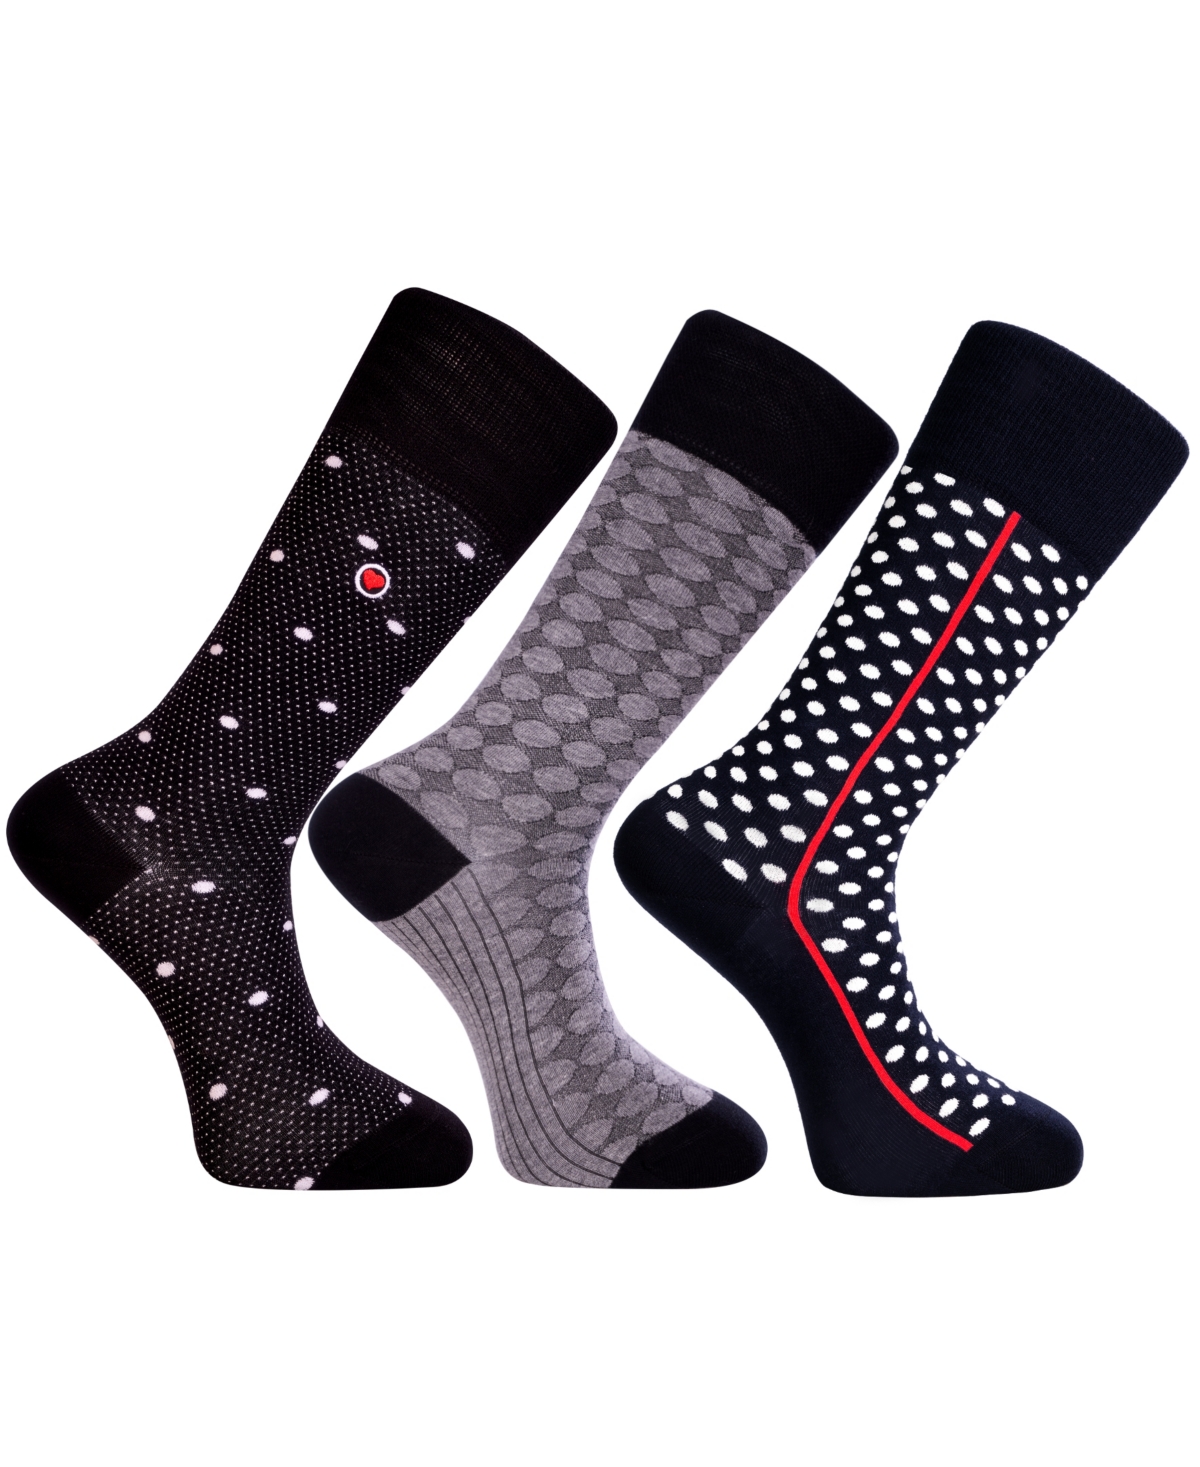 Love Sock Company Men's Detroit Bundle Luxury Mid-calf Dress Socks With Seamless Toe Design, Pack Of 3 In Multi Color